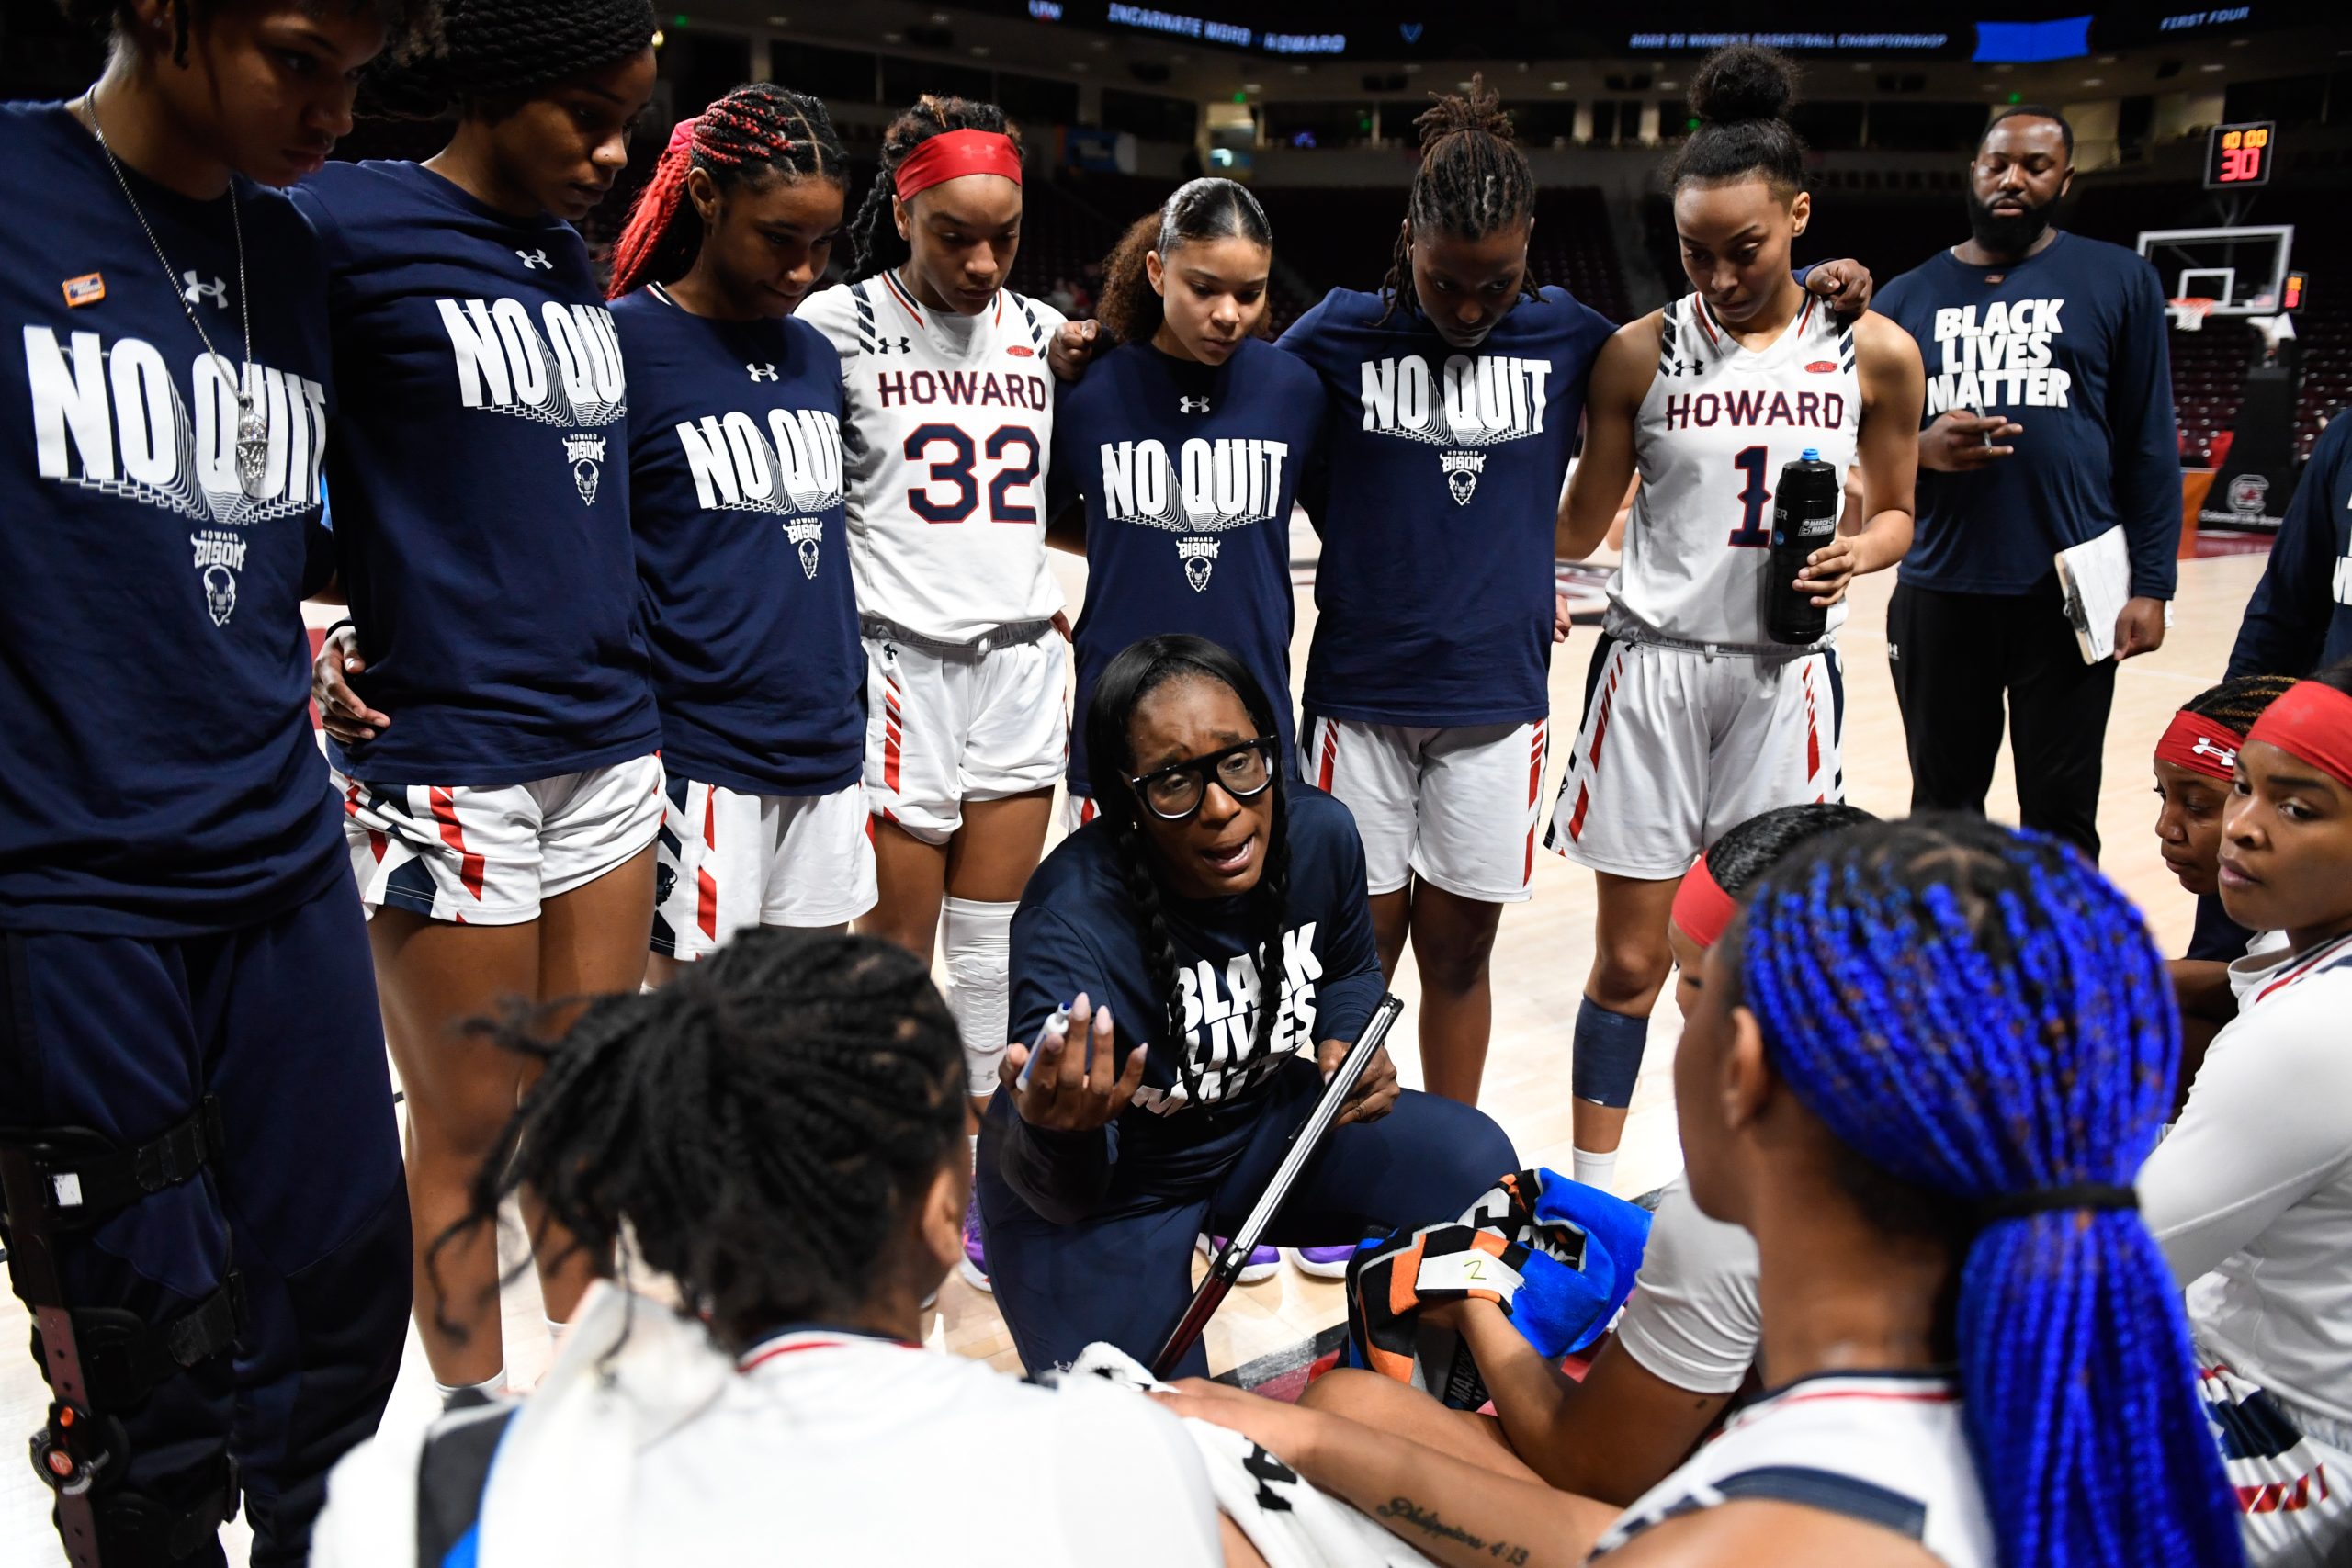 Black History Month Sitdown With Women's Basketball Coach Anita